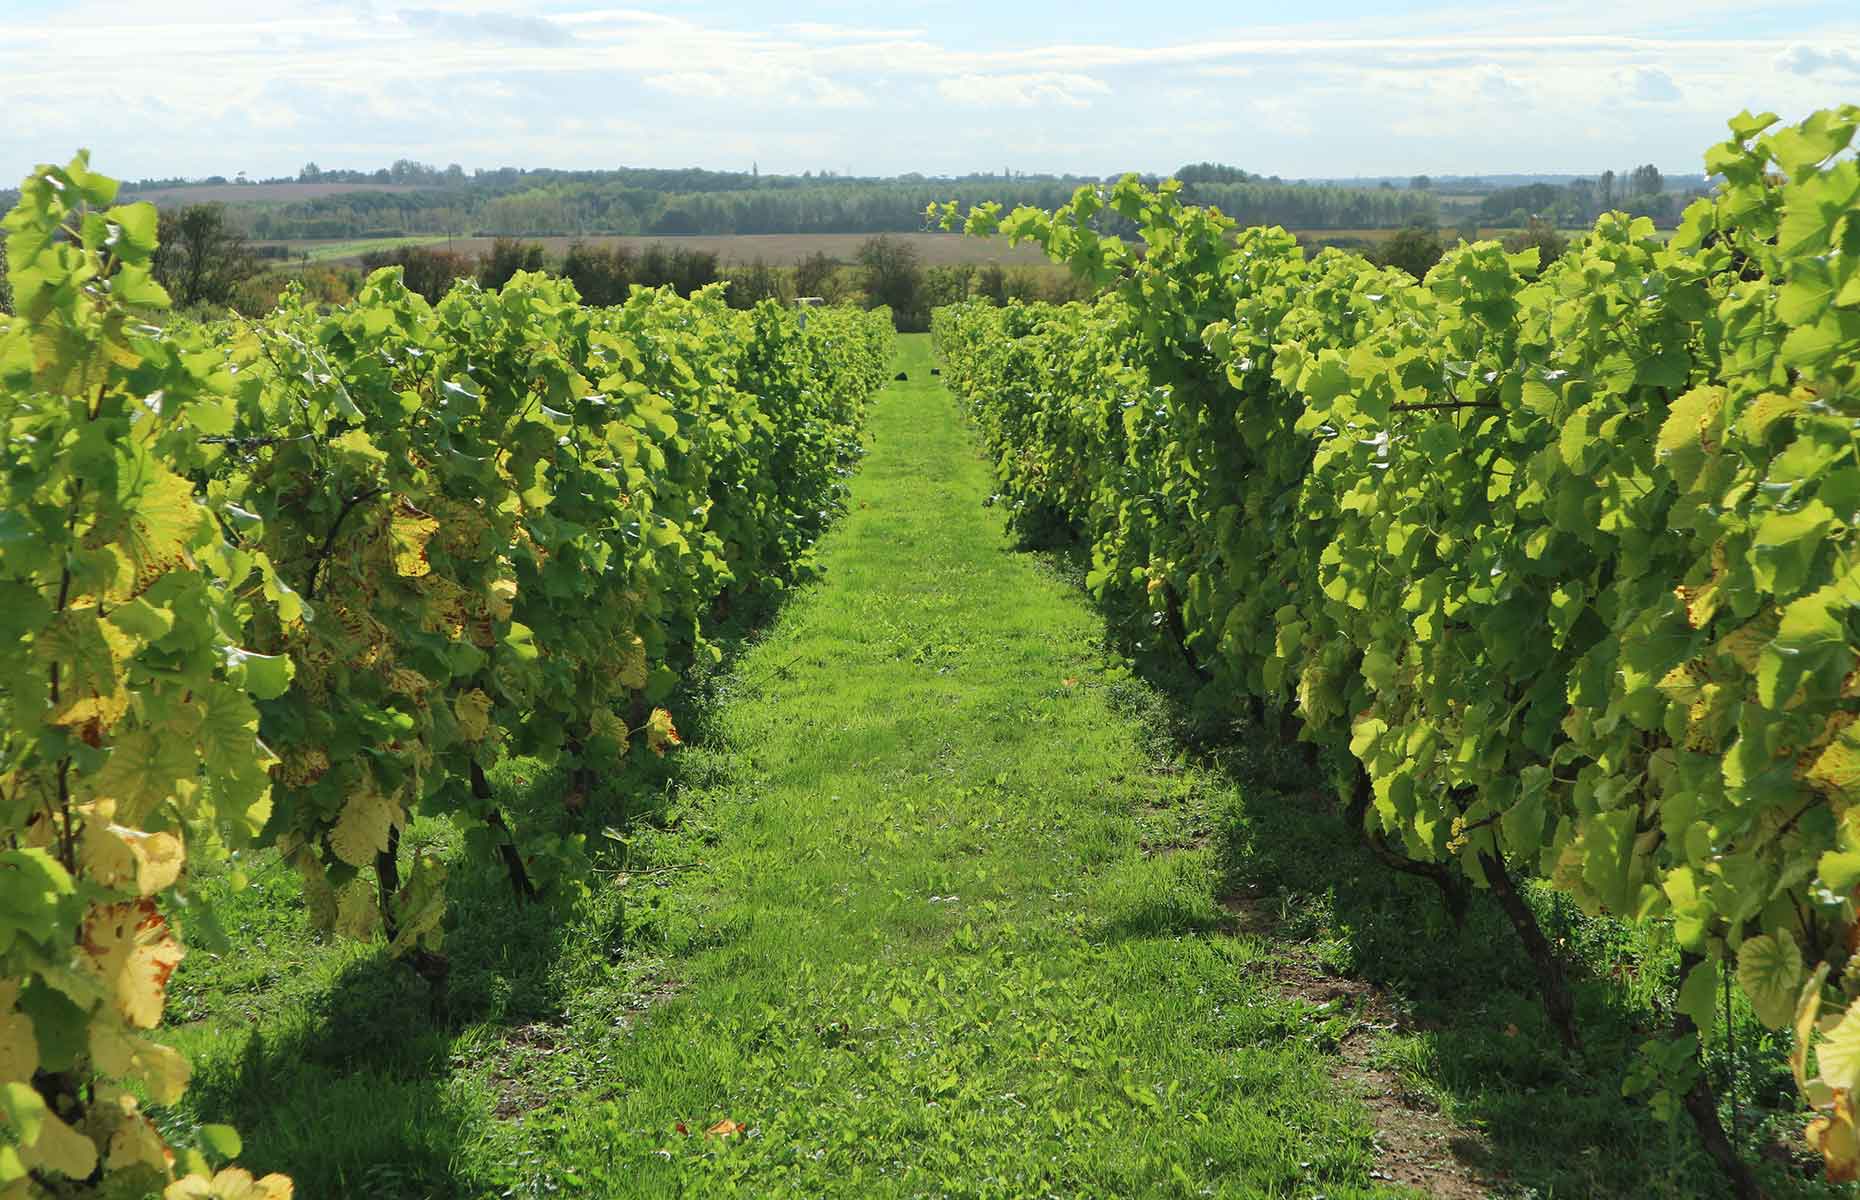 English vineyard (Image: AlCam/Shutterstock)